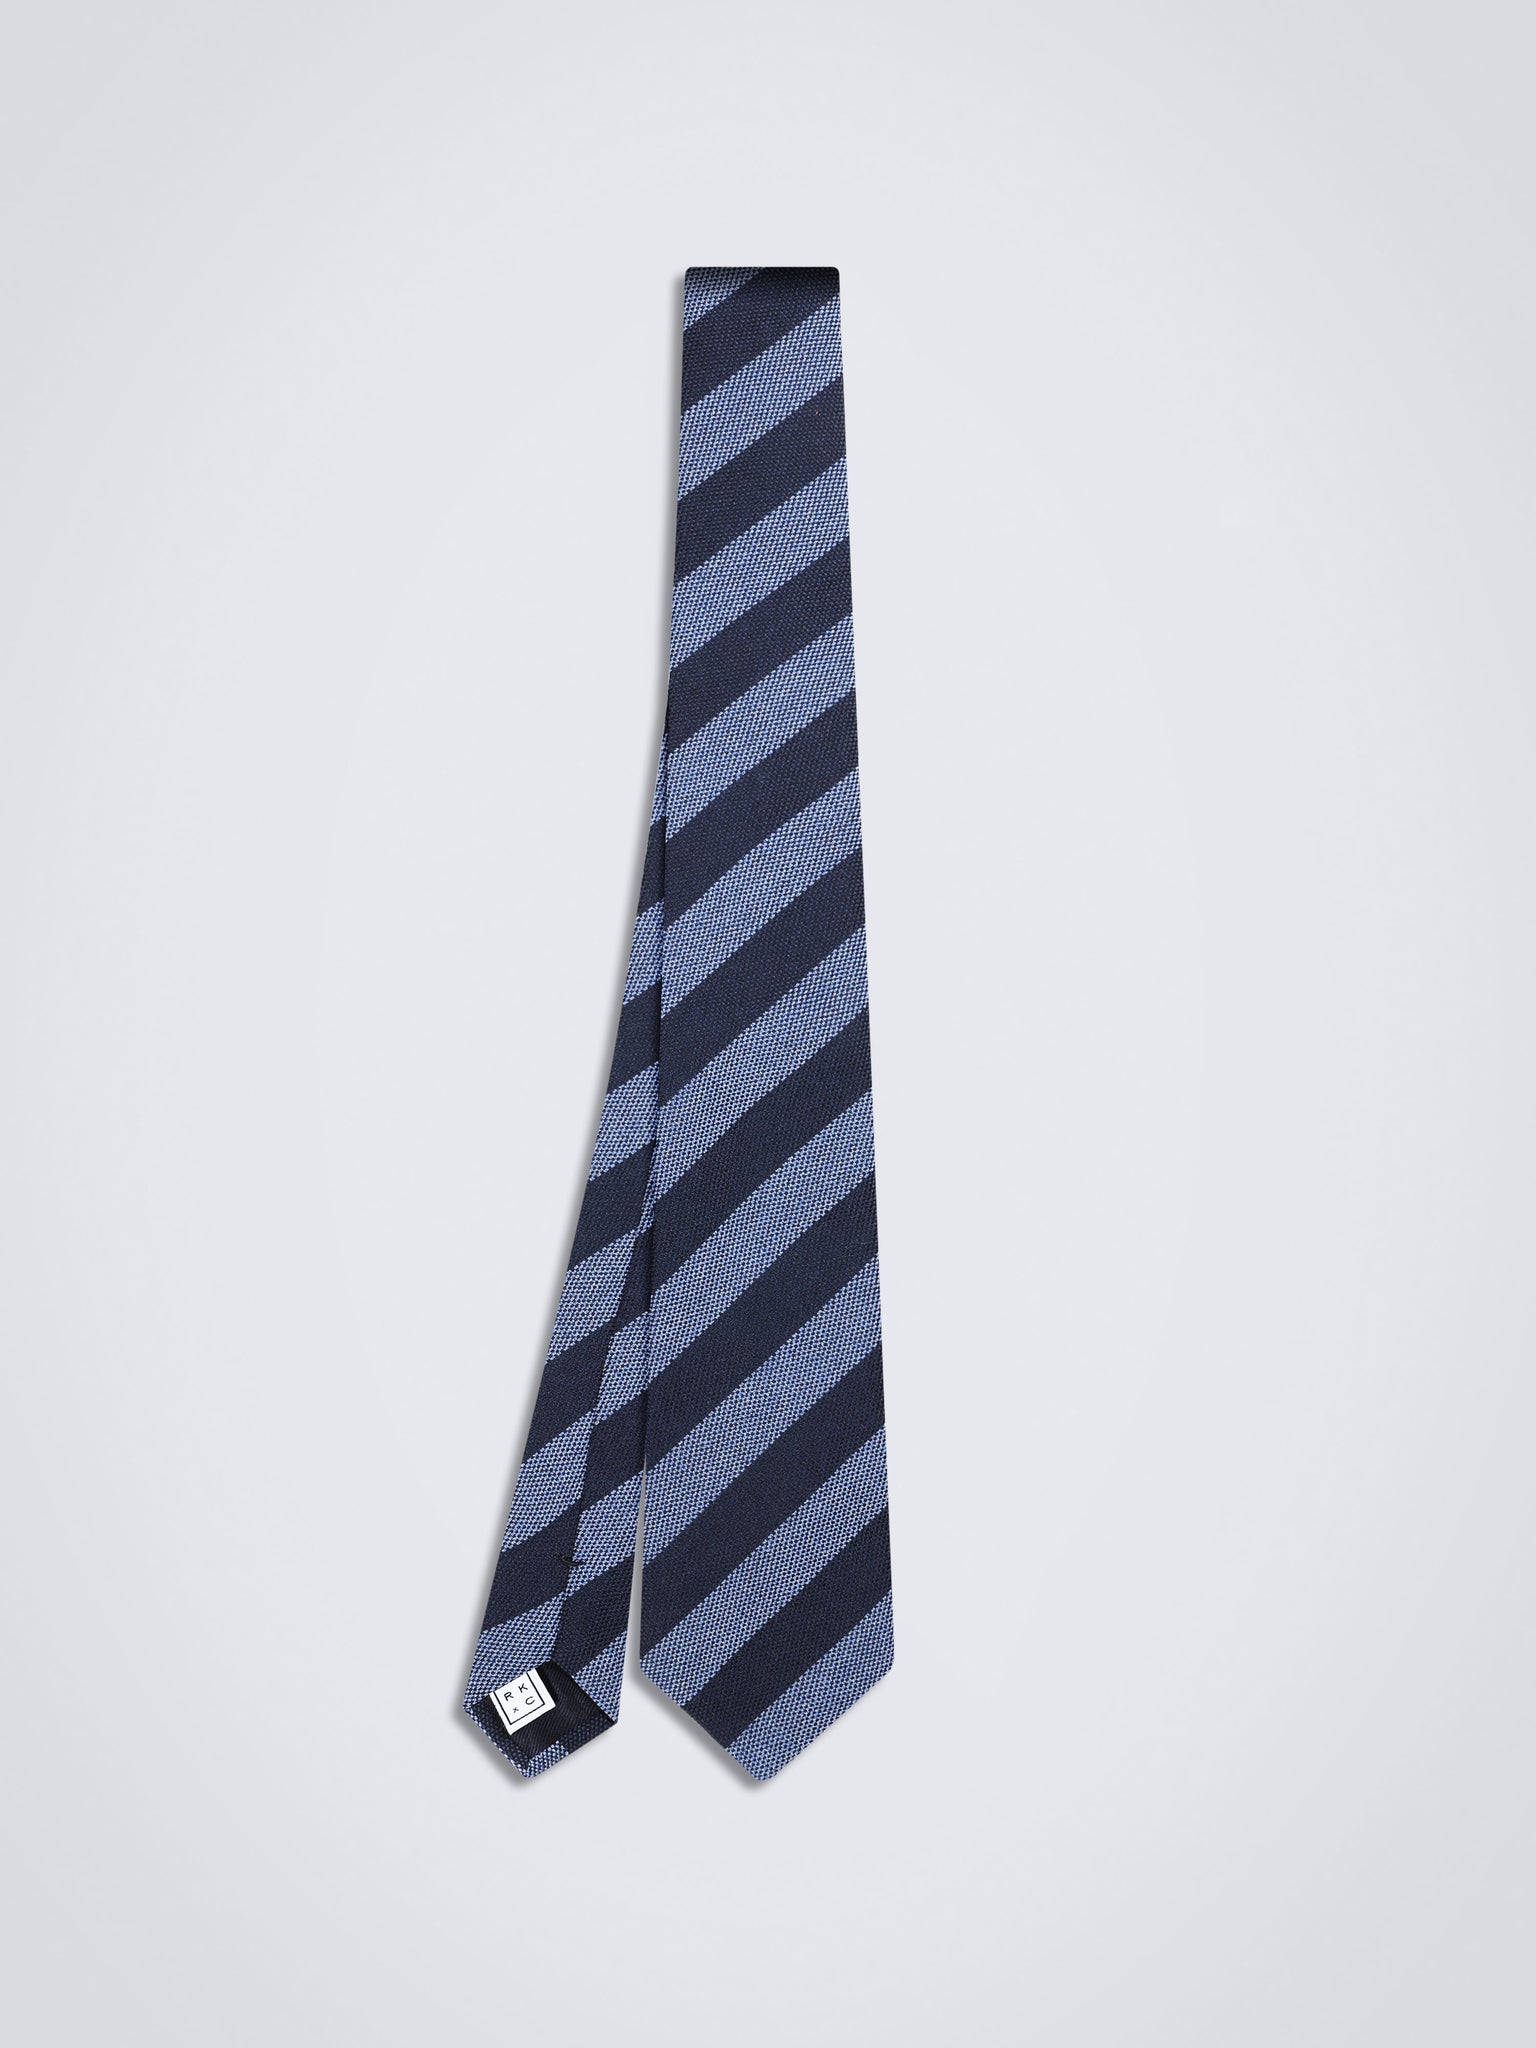 Stripes (Navy & Blue)